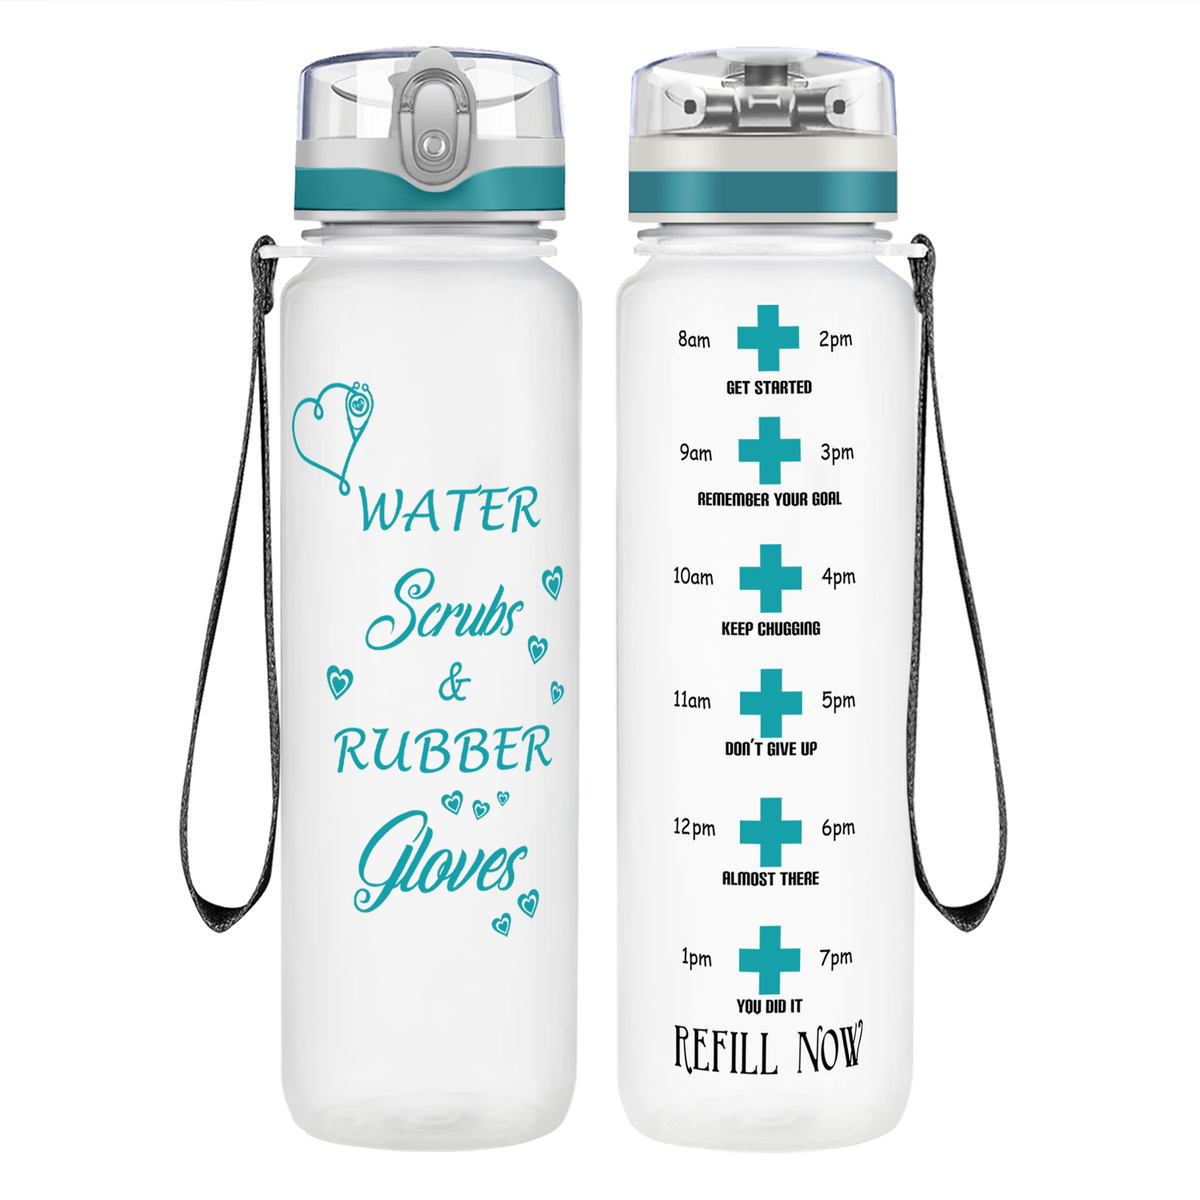 Water Scrubs Rubber Gloves Nurse Motivational Water Bottle